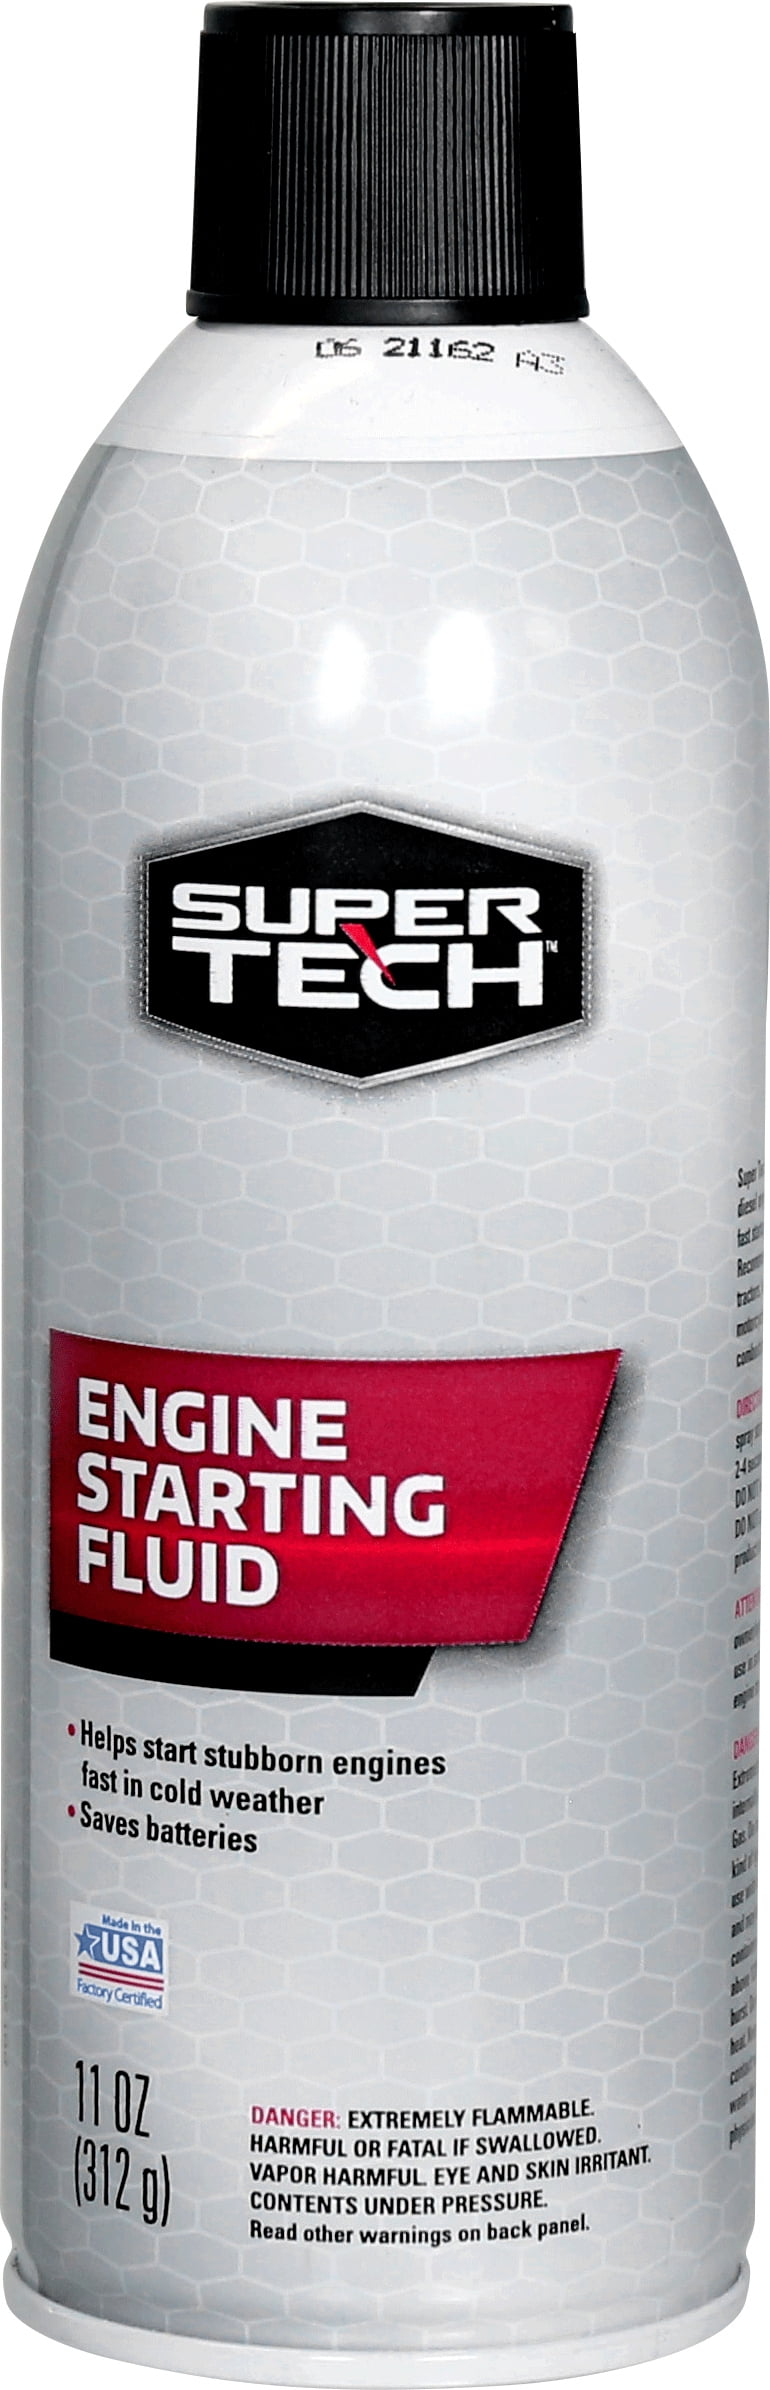 Super Tech Engine Starting Fluid, 11 fl oz